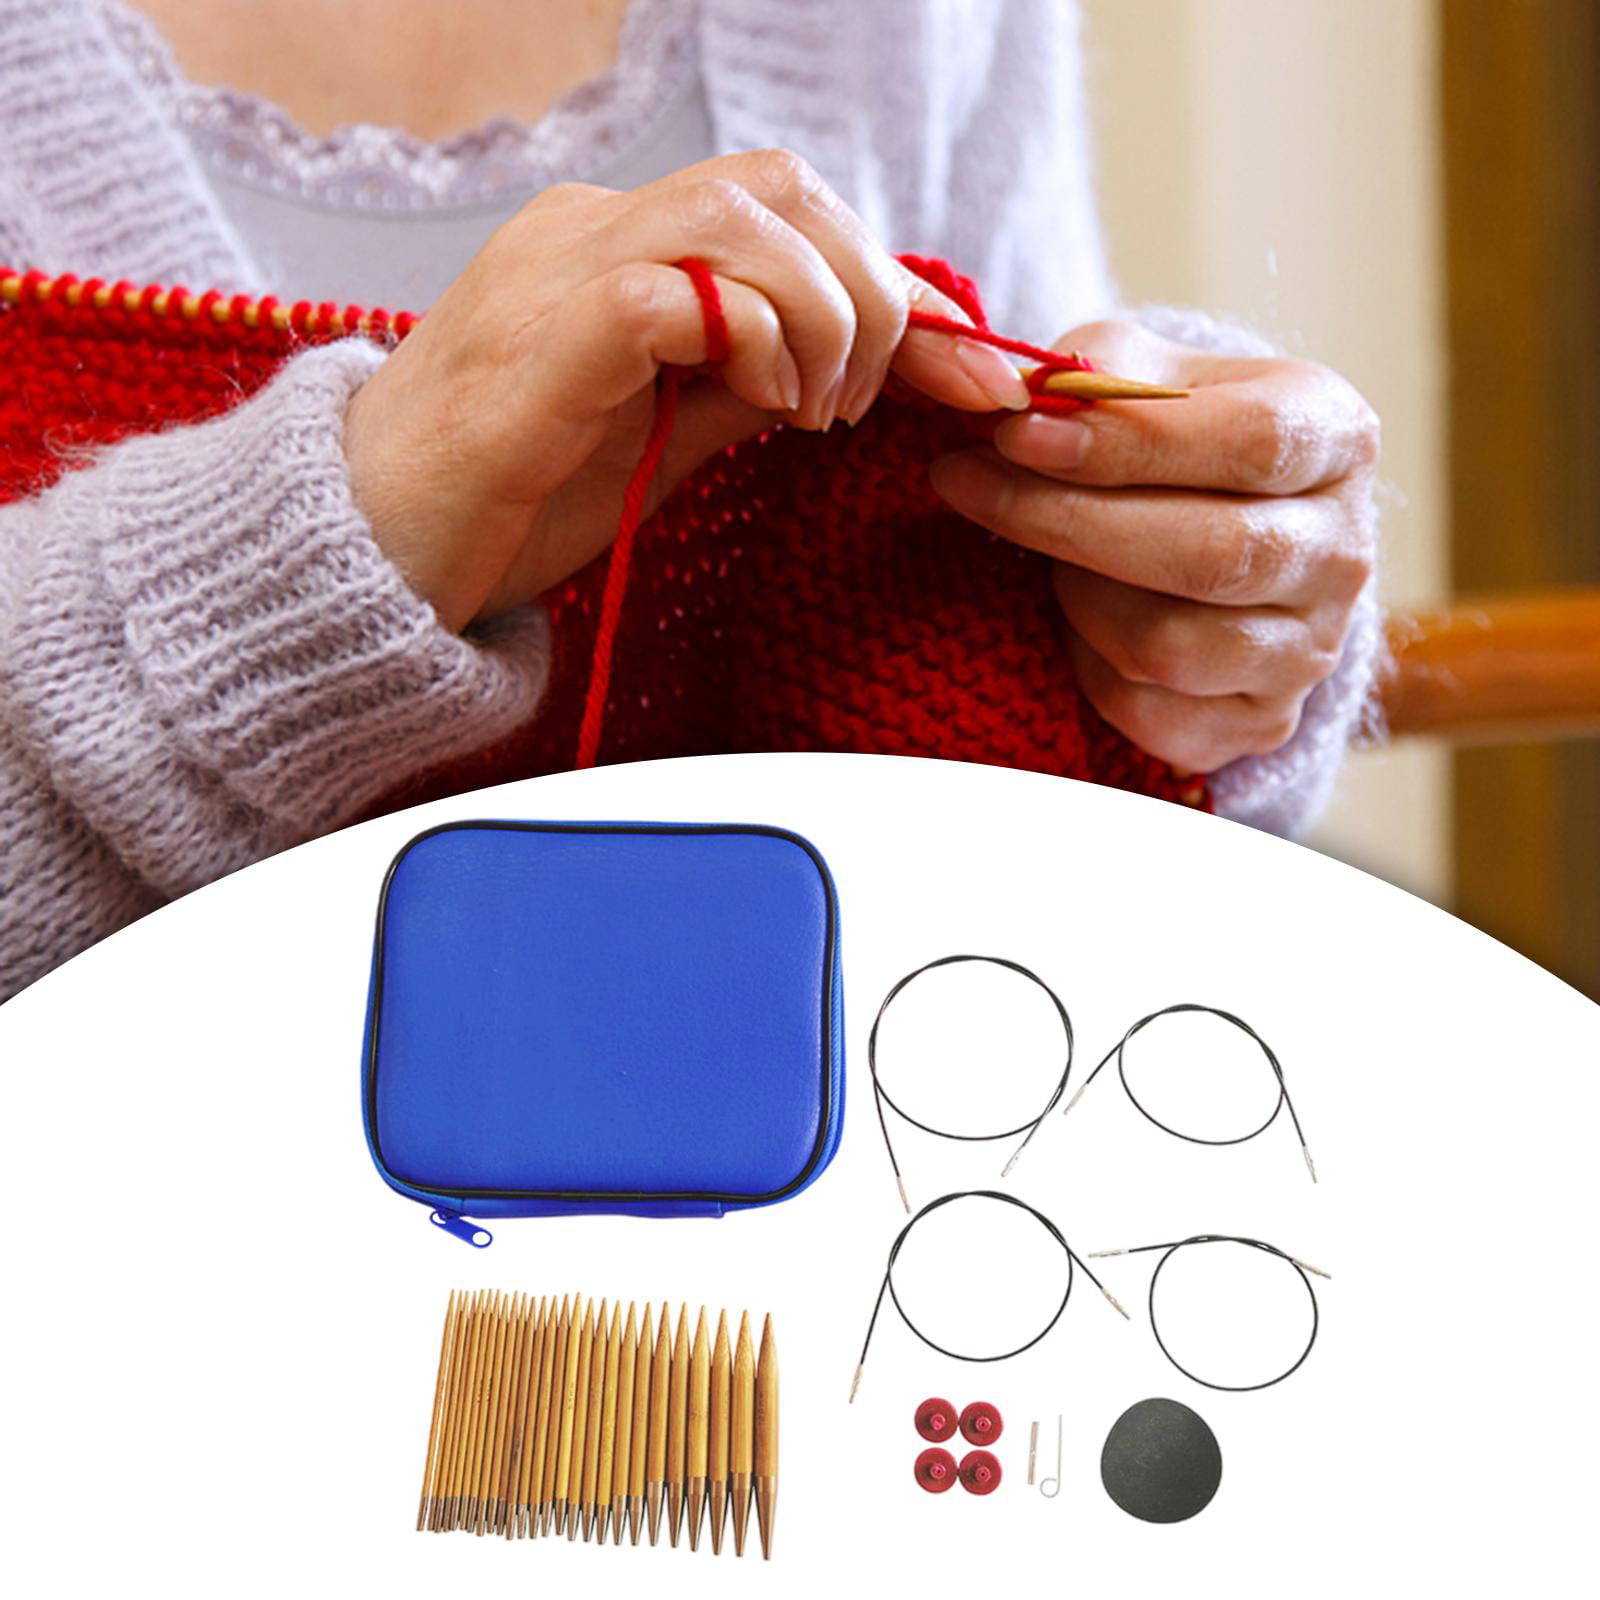 Plastic Yarn Needle for Knitting, 2.75 and 3.5 sizes, multi